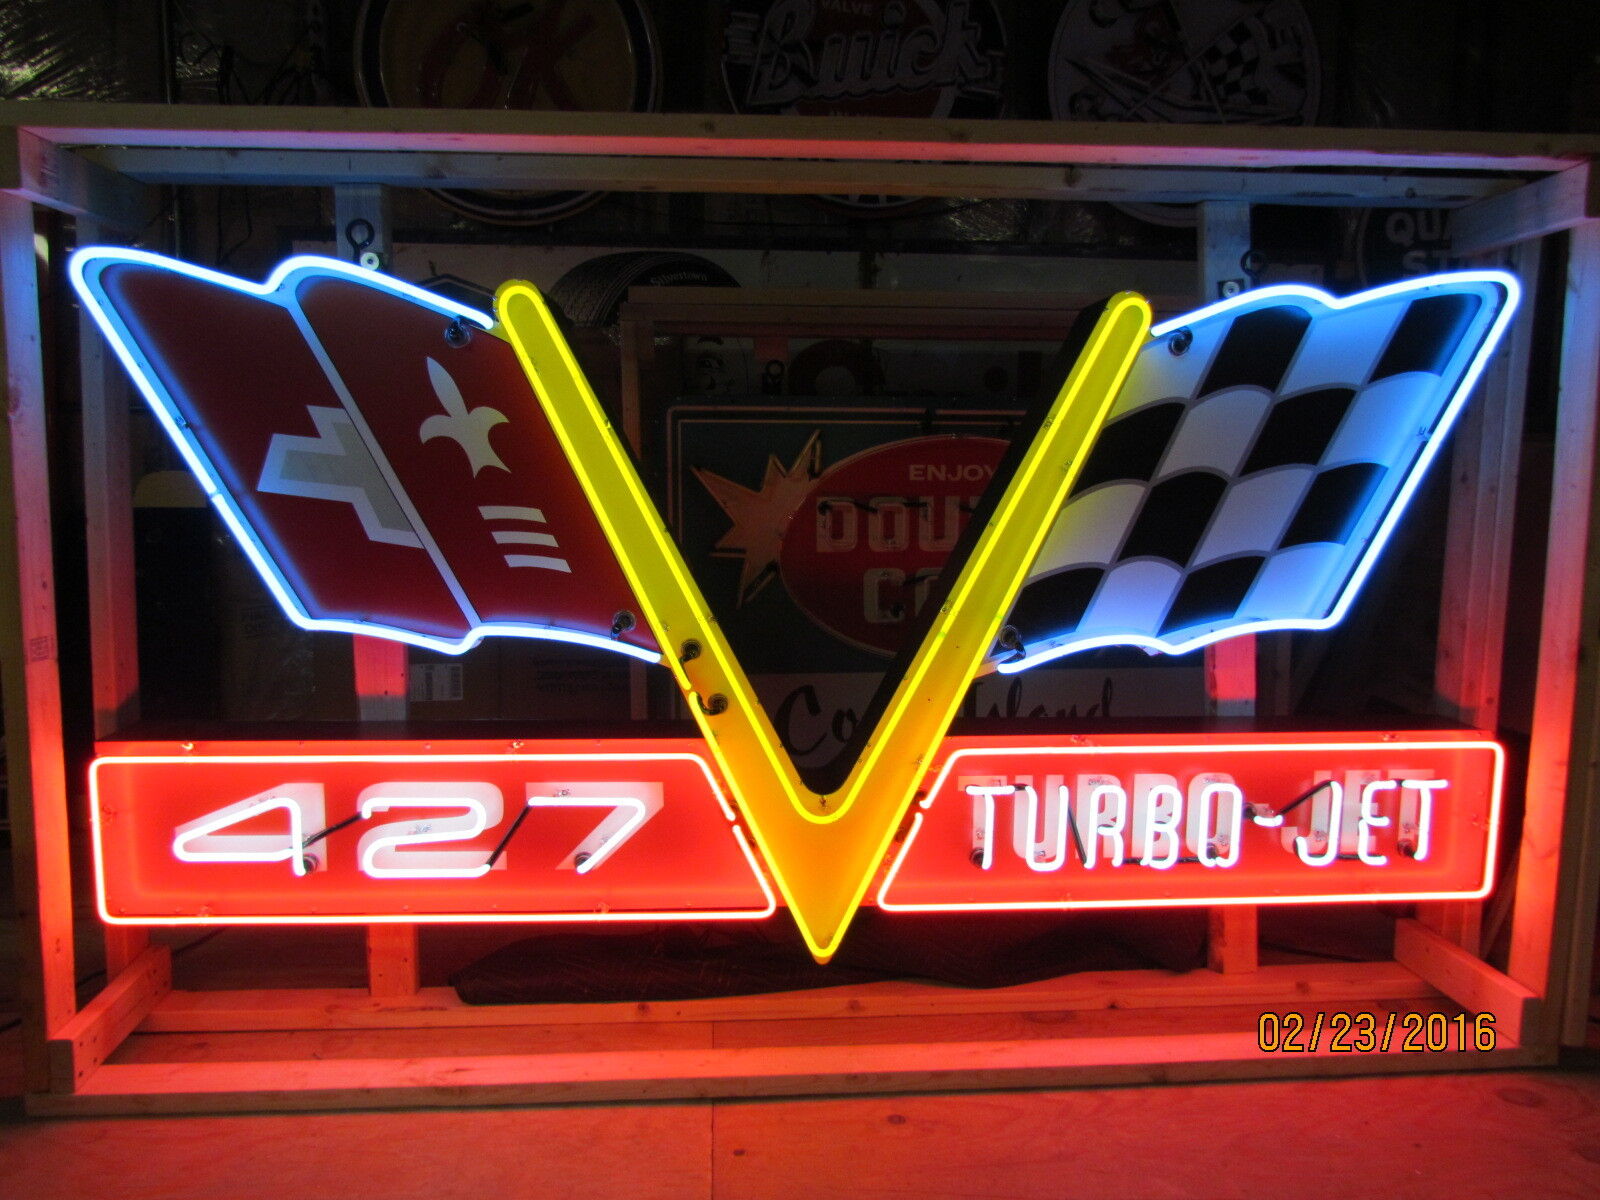 New Corvette 427 Turbo-Jet Neon Sign 8FT W x 4FT H Neon Signs Lifetime Warranty